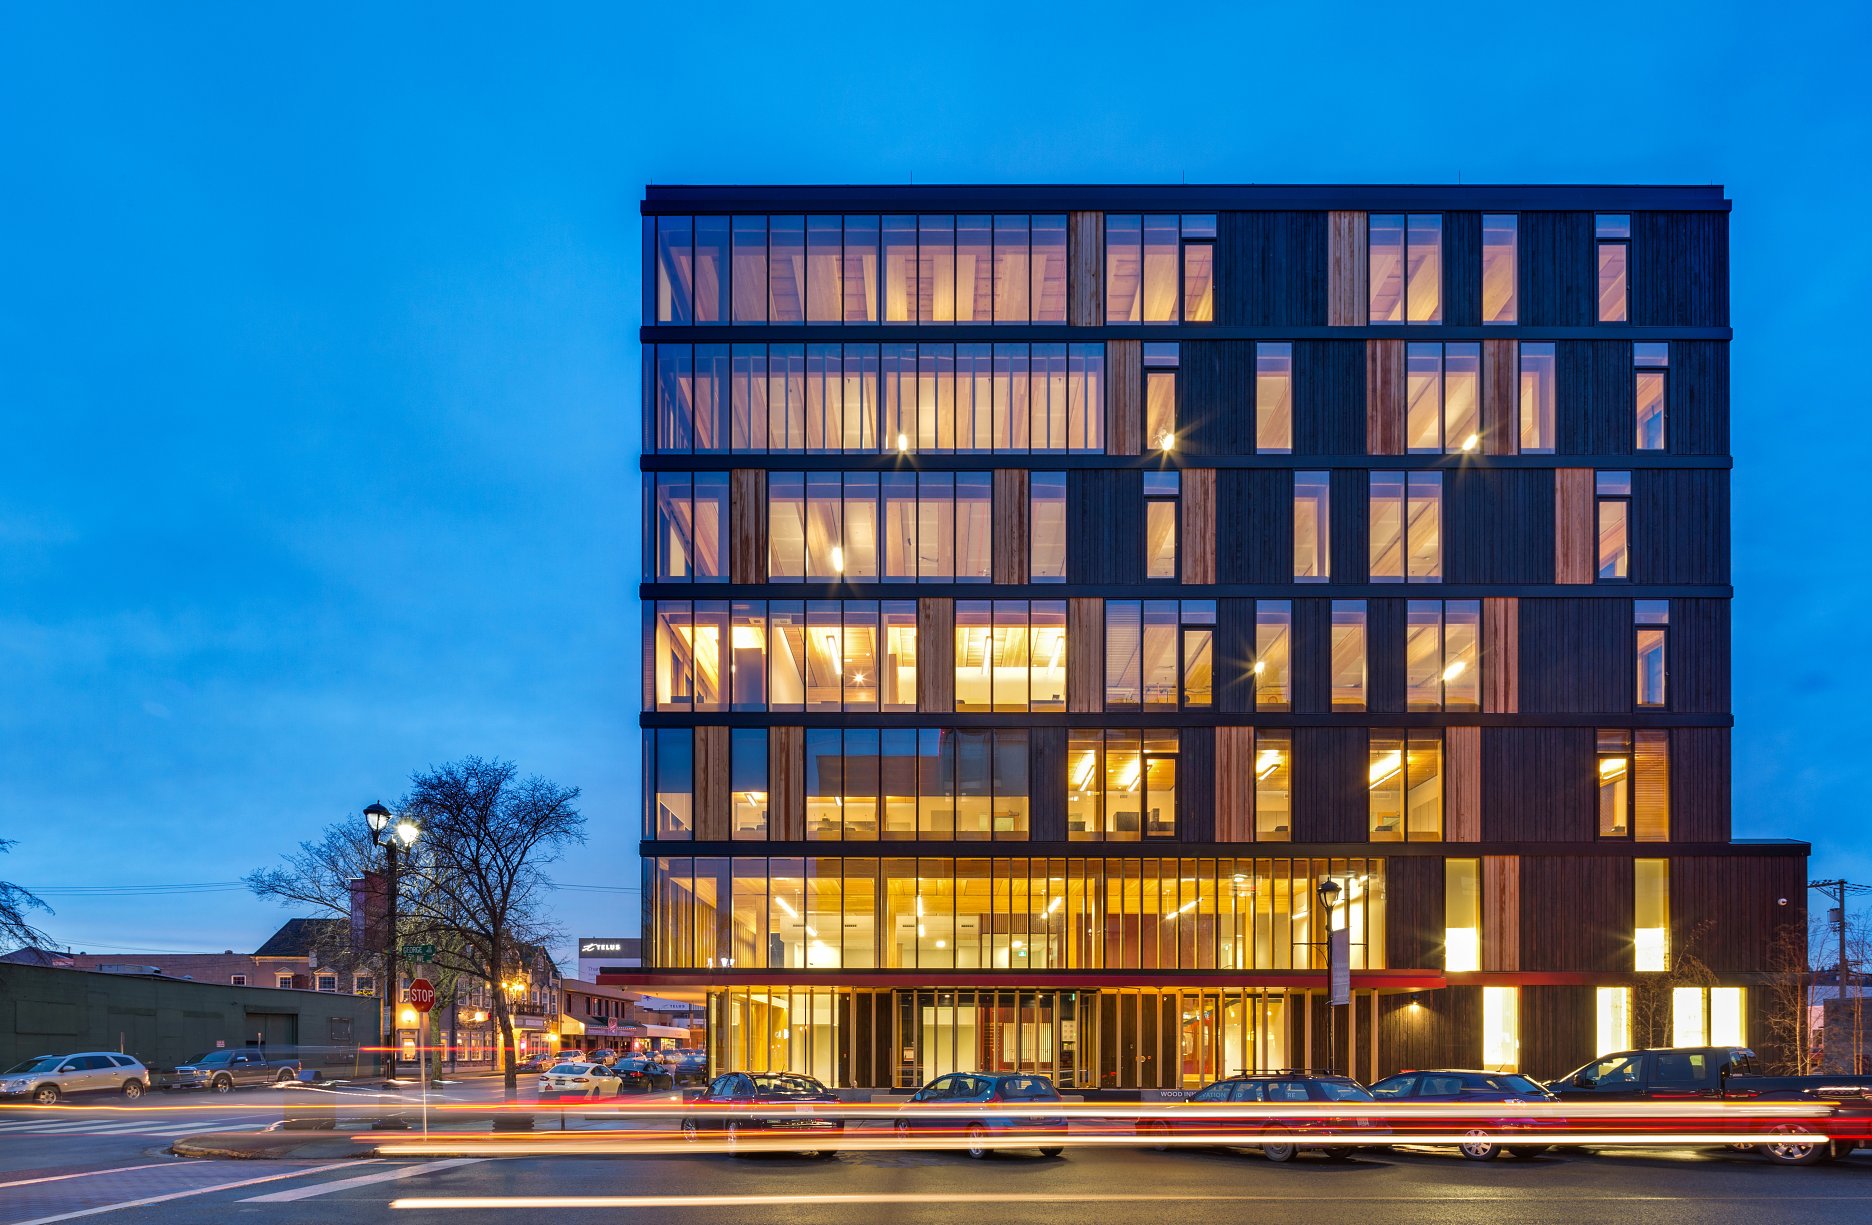 Osemposchodová budova určená pre potreby "Wood Innovation and Design Center"  pri "University of Northern British Columbia in Prince George" v  Britskej Kolumbii (Kanada).